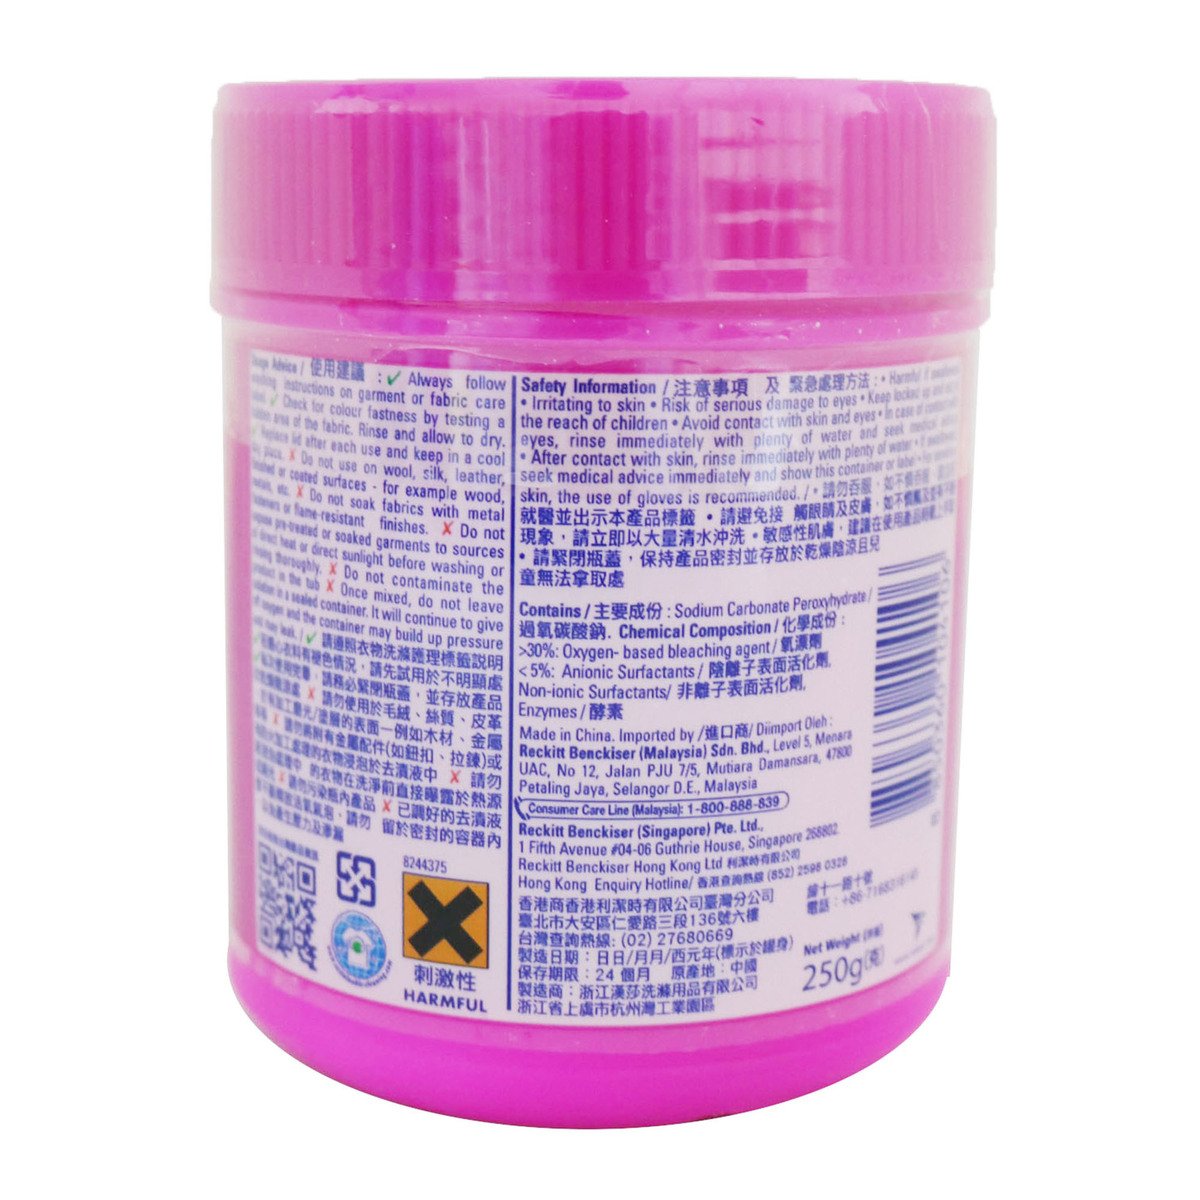 Vanish Pink Stain Remover Powder 250g